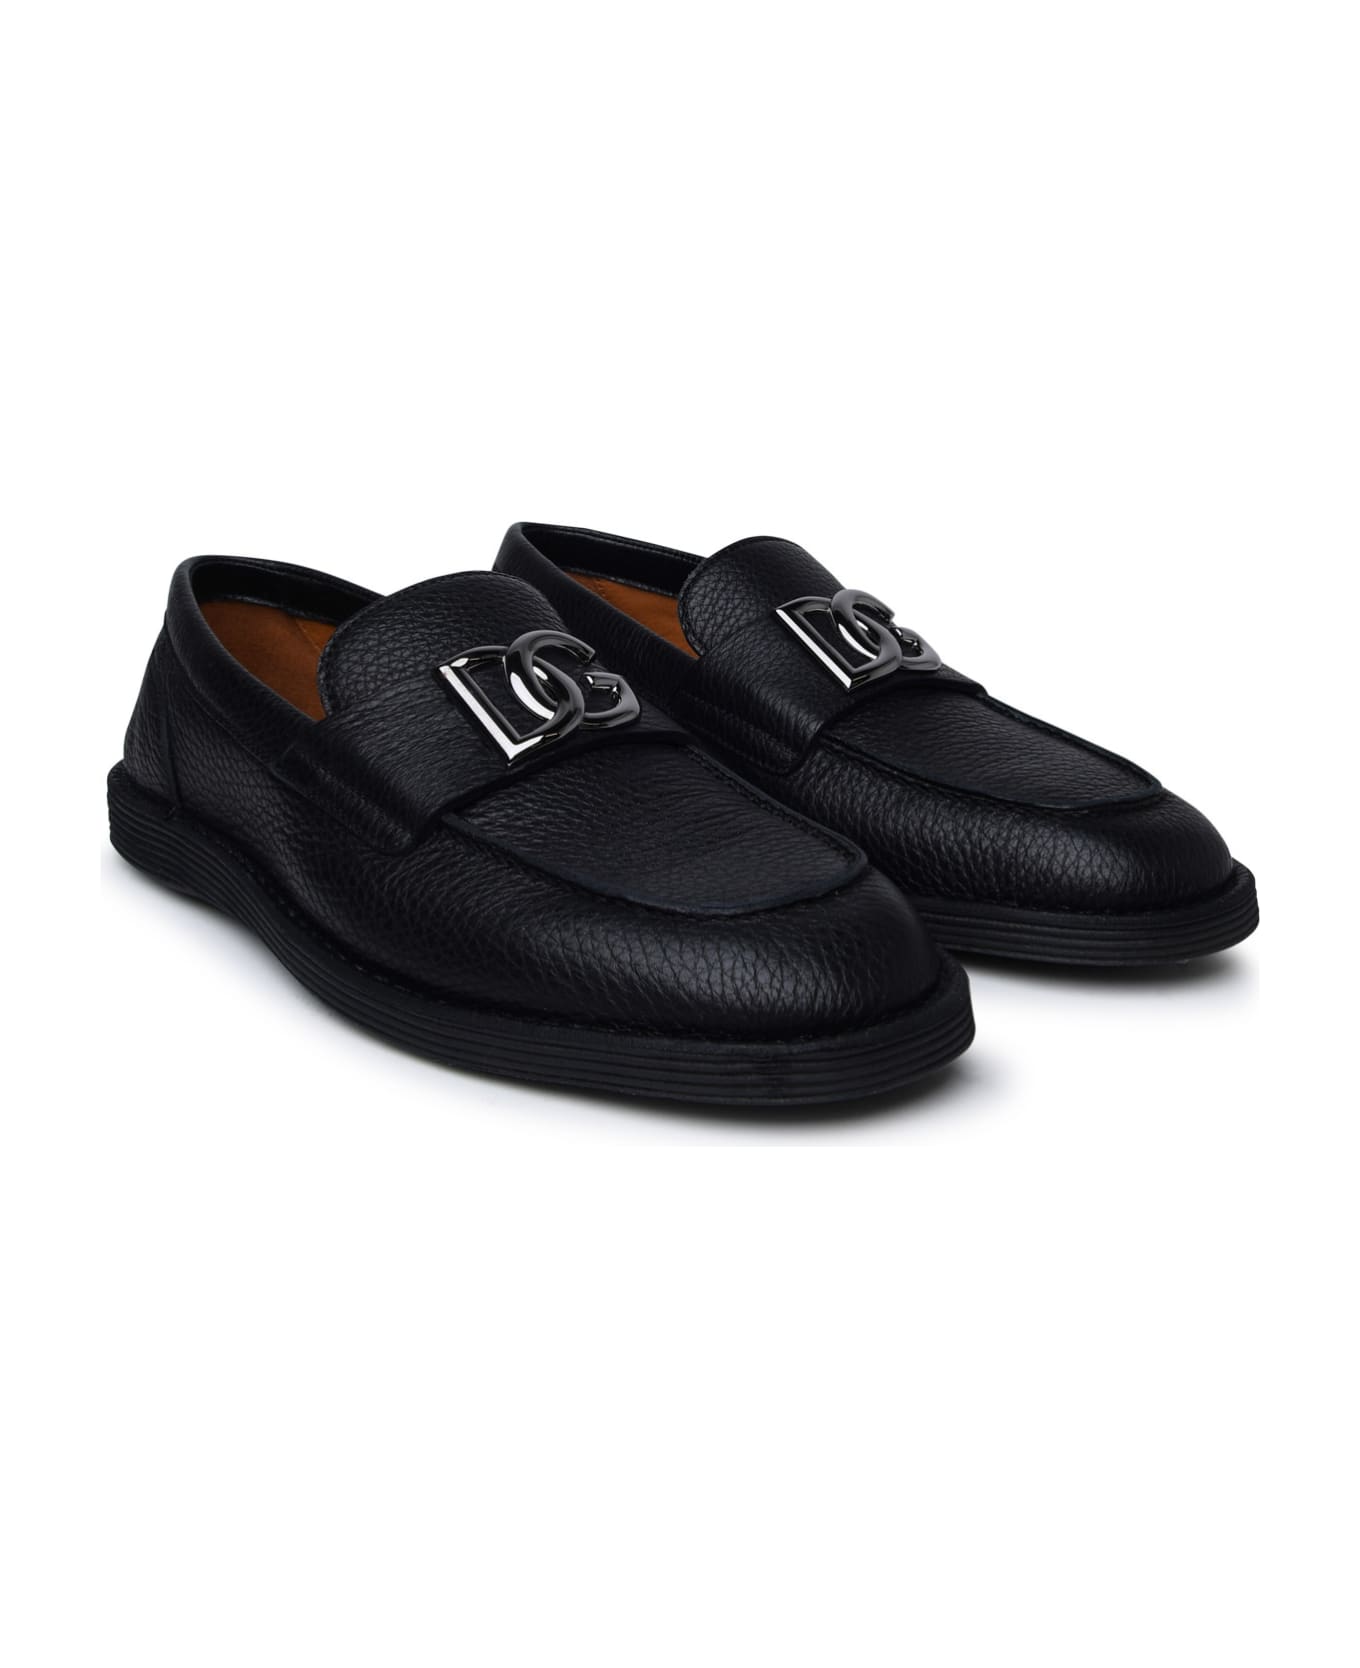 Dolce & Gabbana Black Leather Loafers - Black